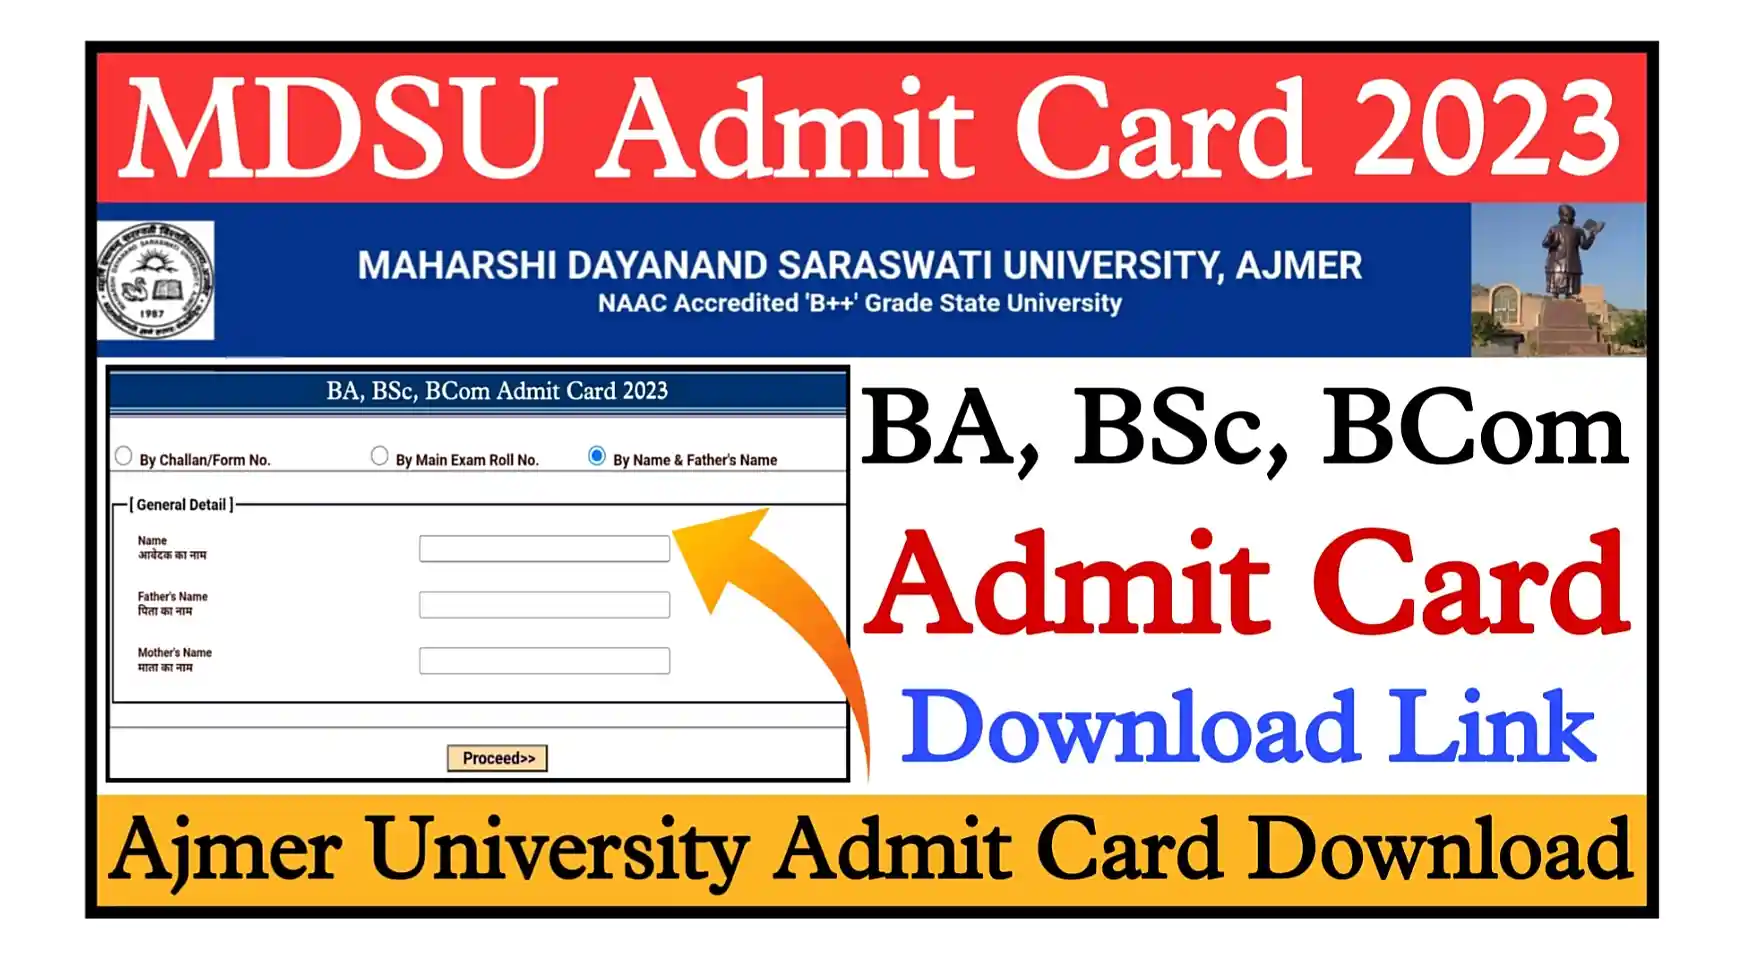 MDSU Admit Card 2023 Download Link MDSU BA, BSc, BCom Admit Card 2023 Name Wise Download Link